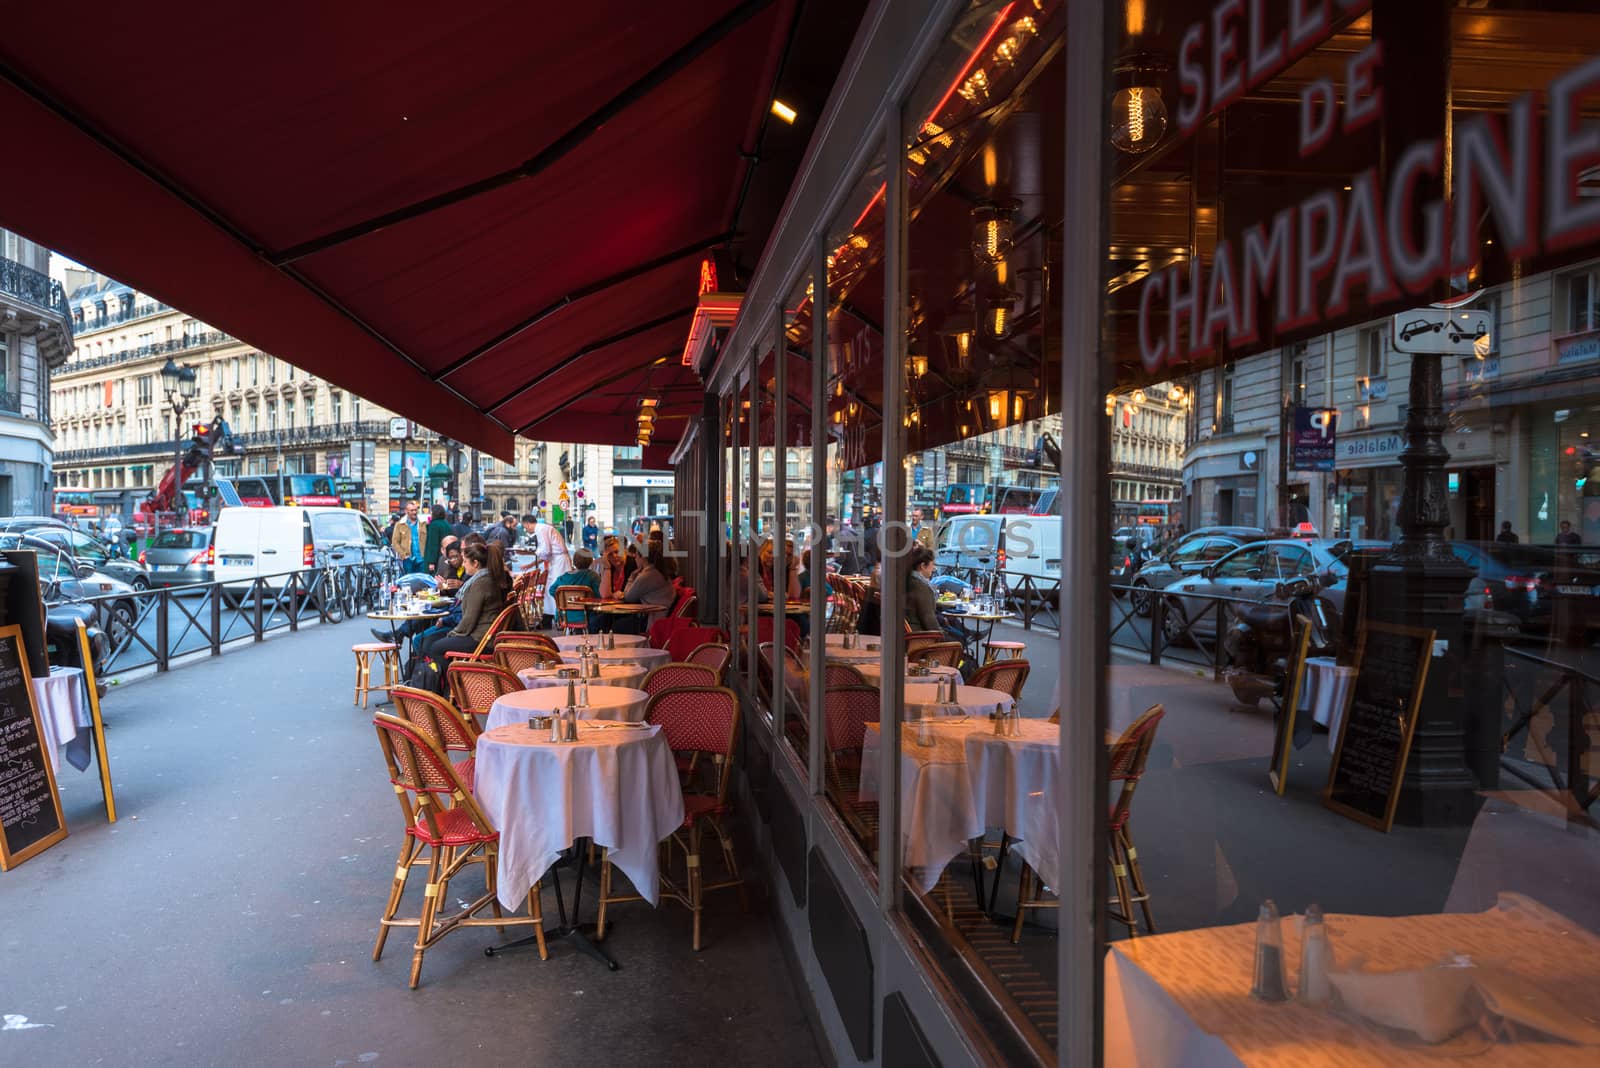 Cafe Life in Paris by jfbenning